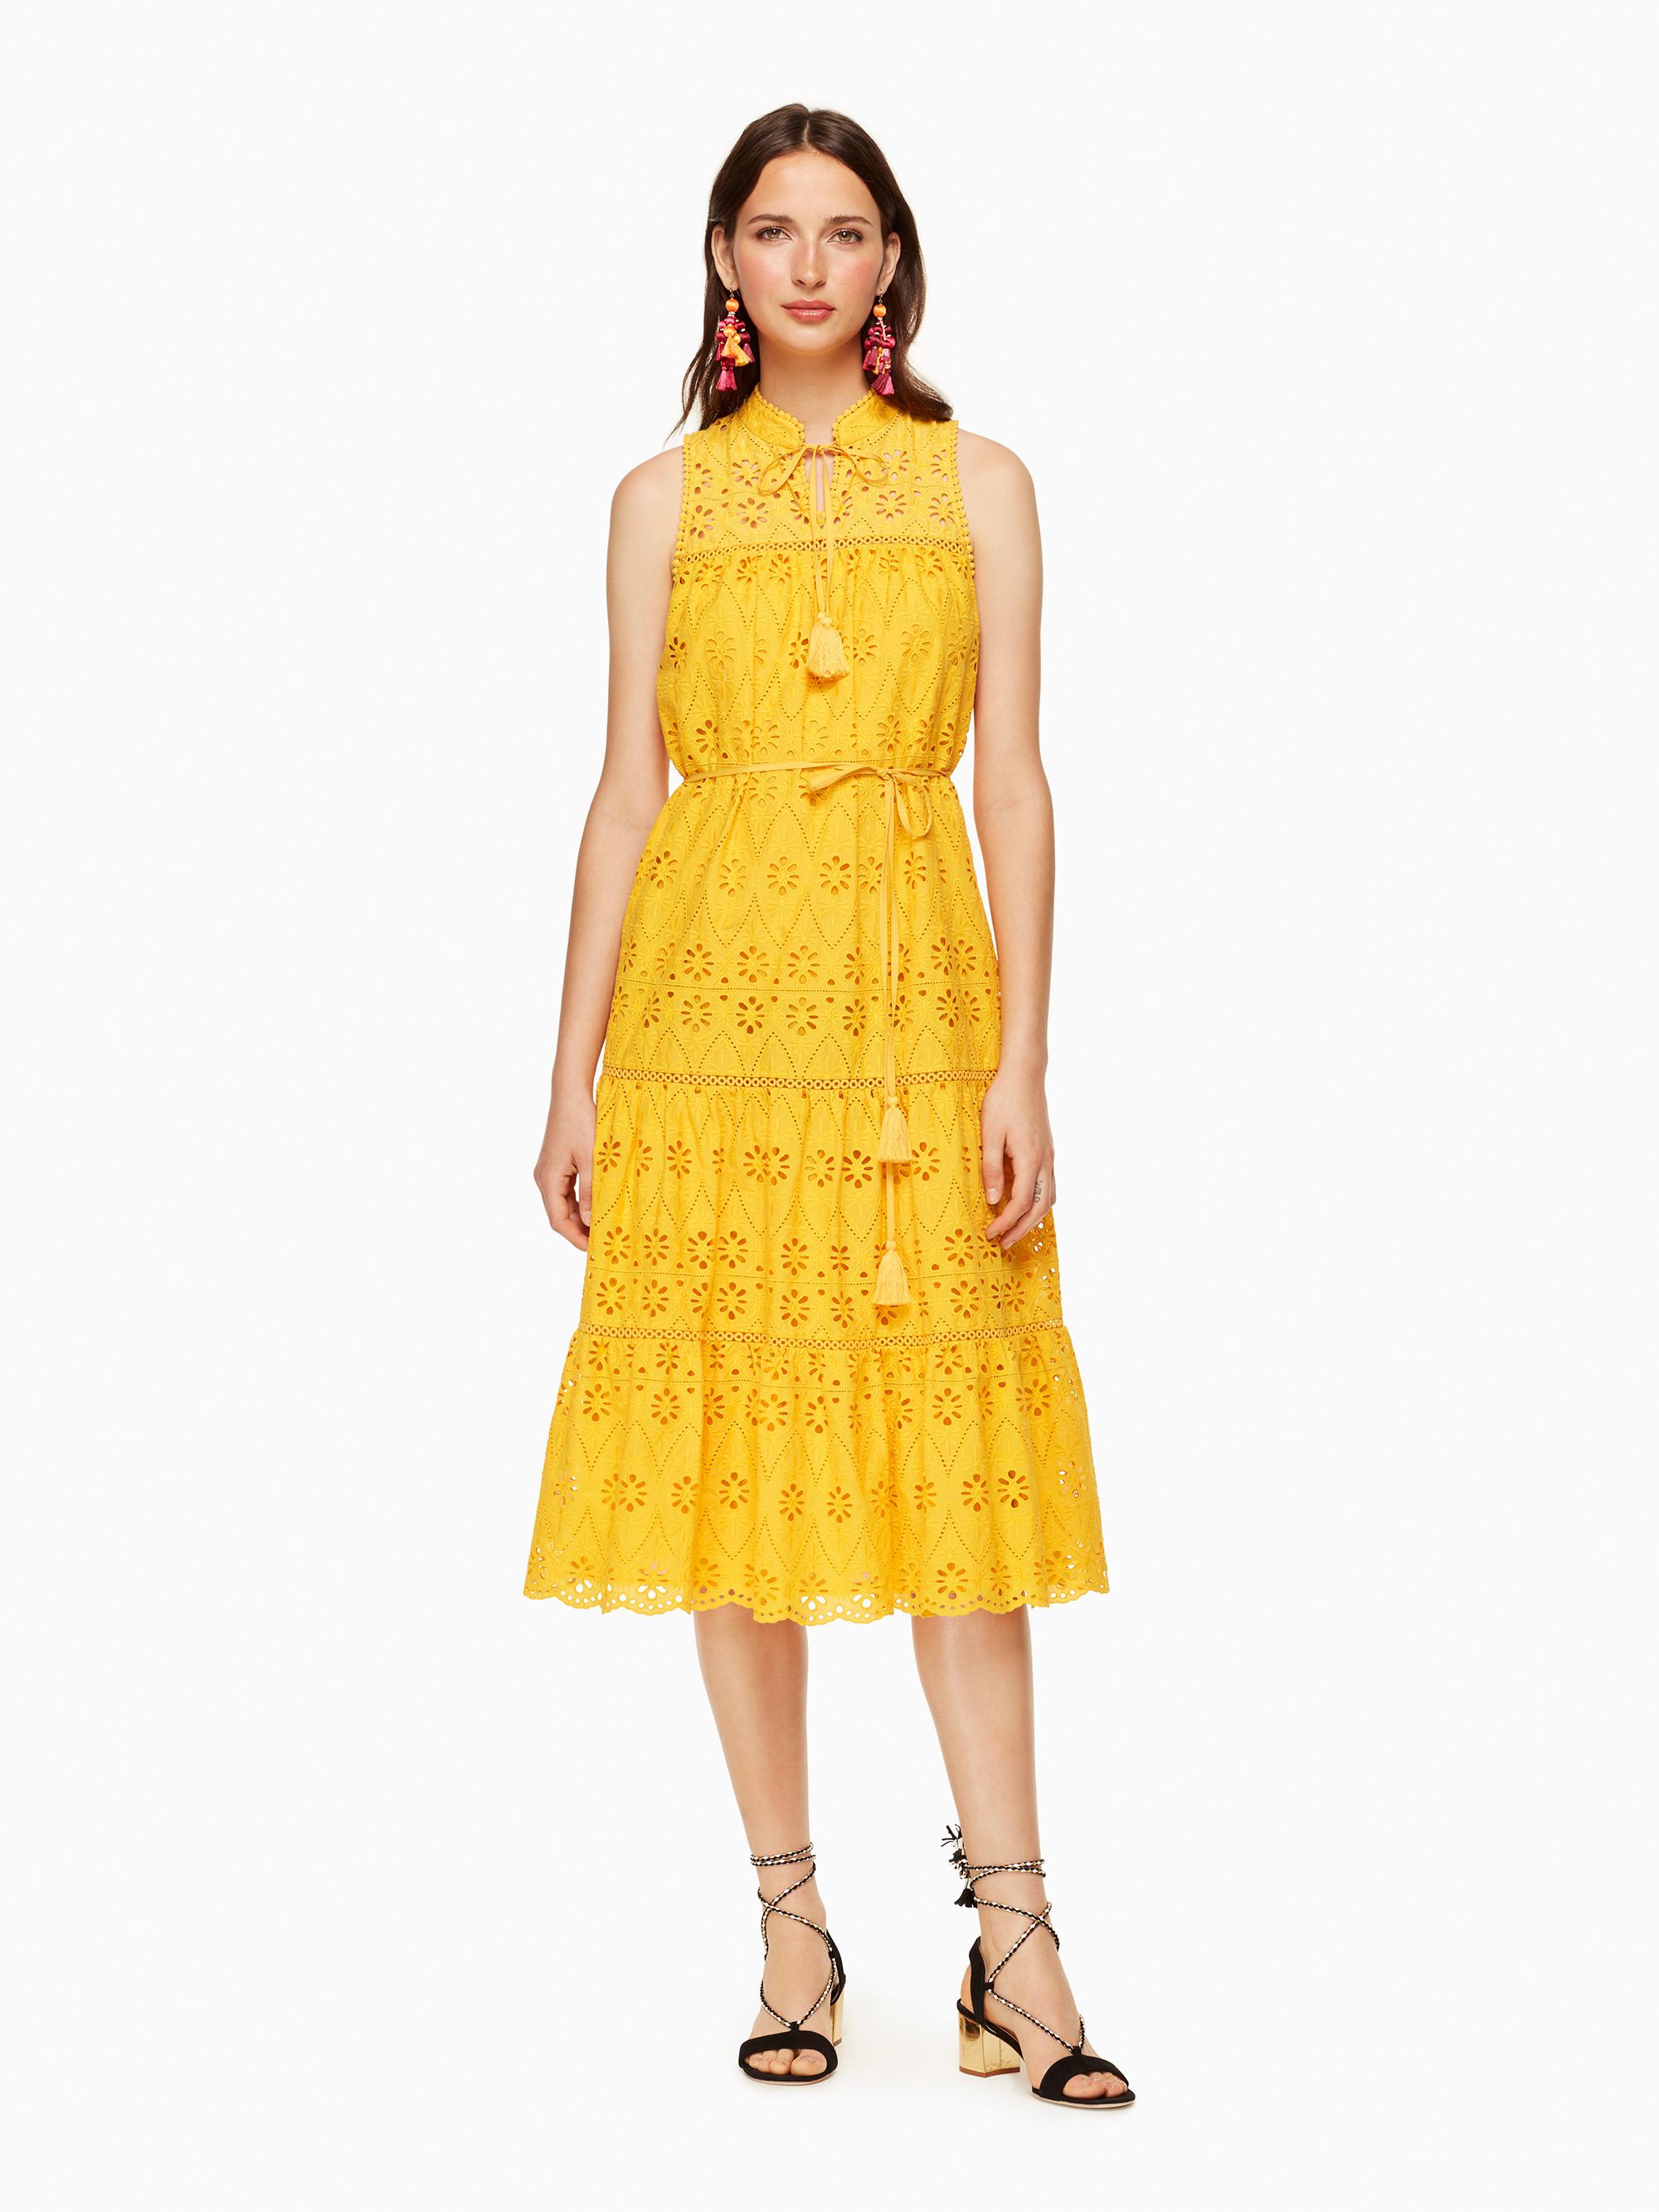 Lyst - Kate Spade Eyelet Patio Dress in Yellow